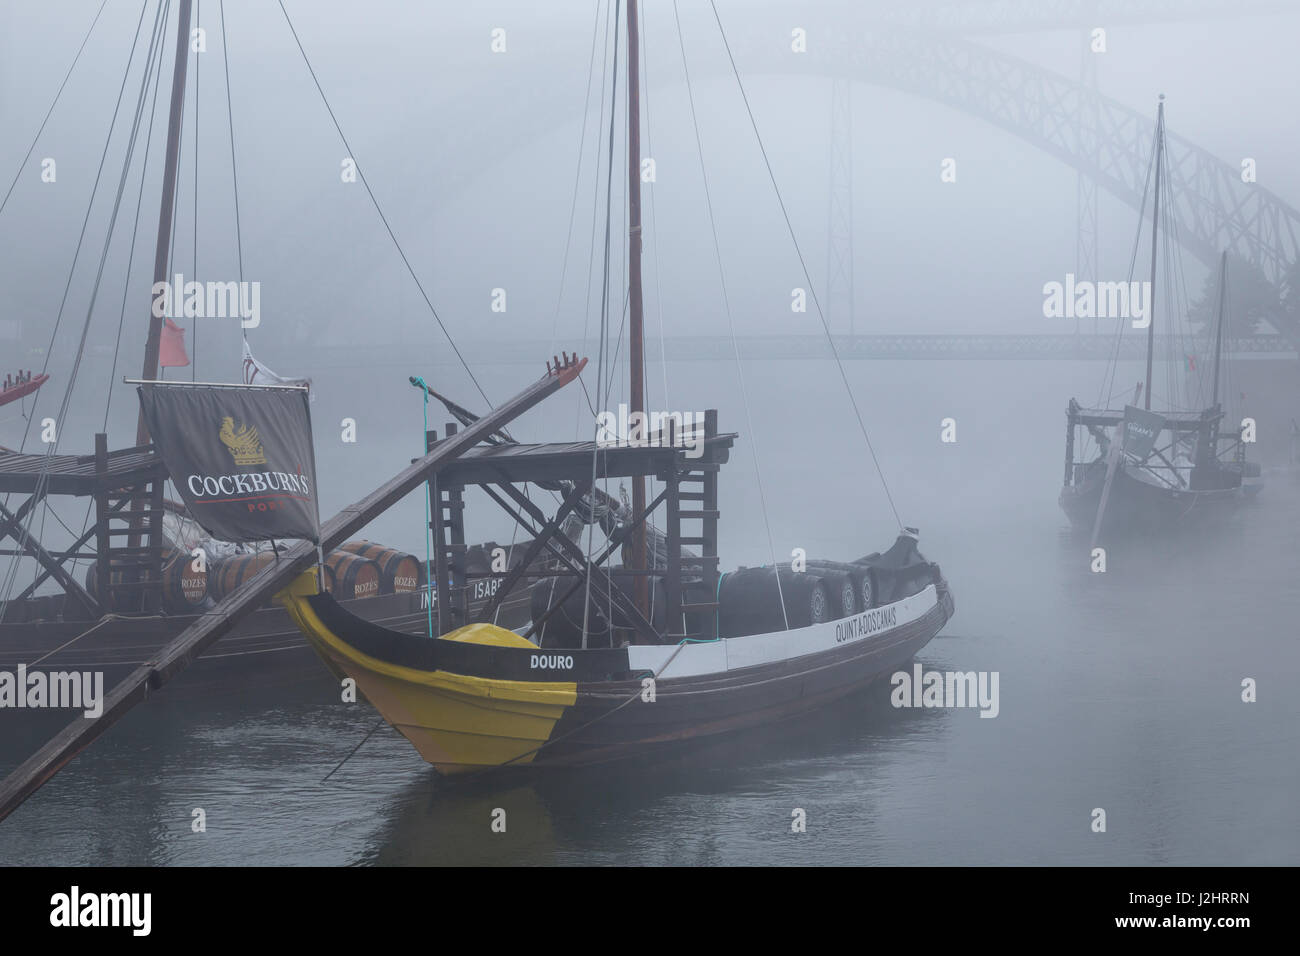 Rabelo boats, port wine boats with mist, Rio Douro, Porto, Portugal, Europe Stock Photo